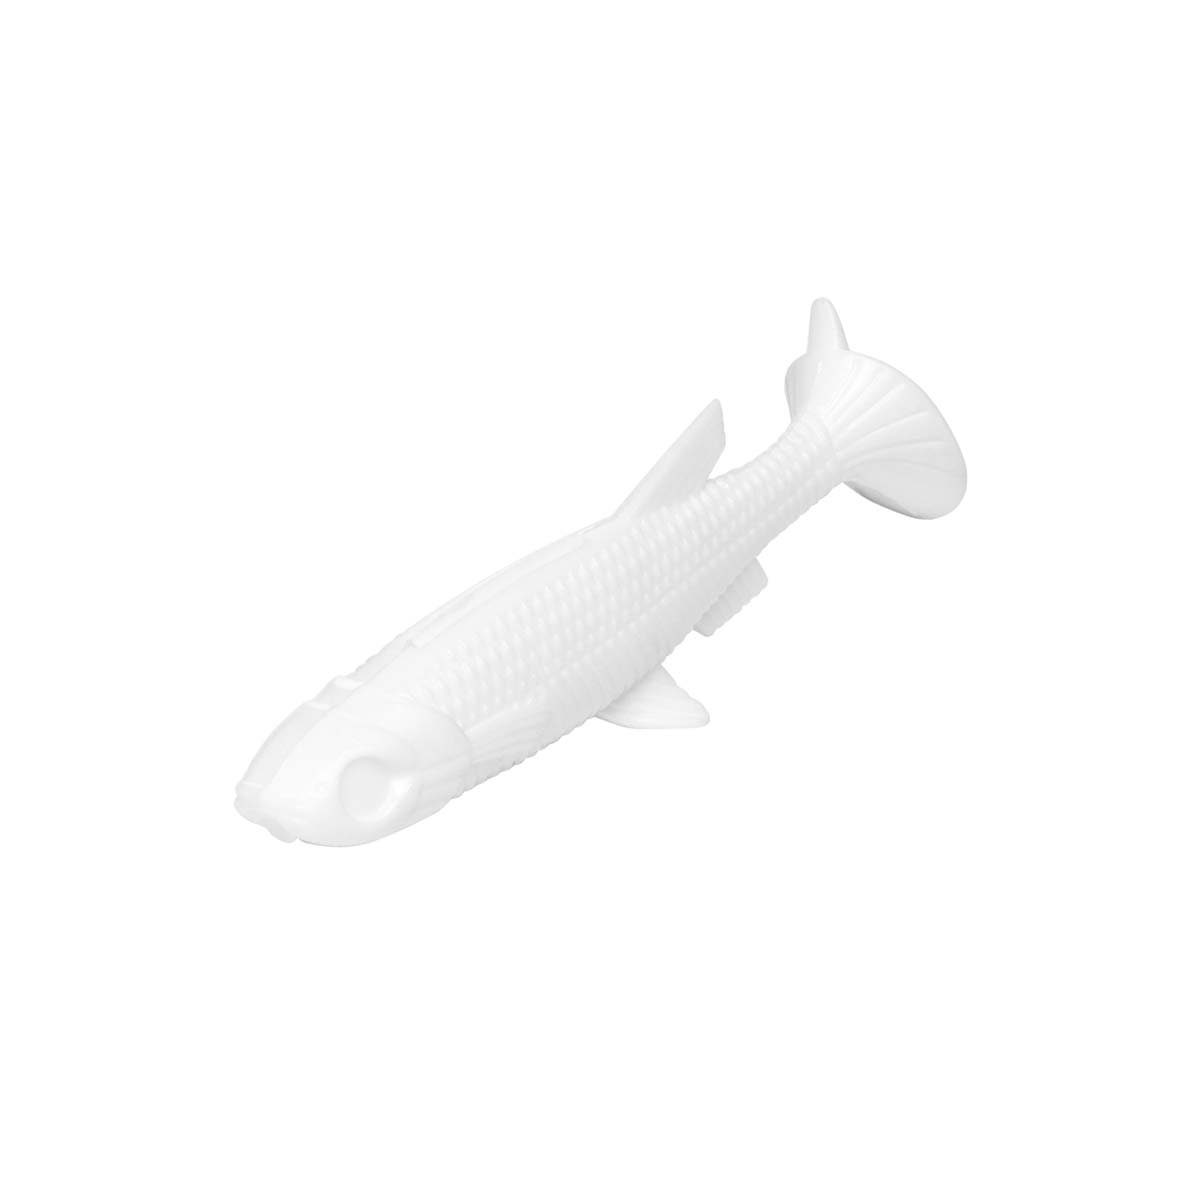 Nelma 3.15" Soft Paddle Tail Swimbait 6 pcs in Pack